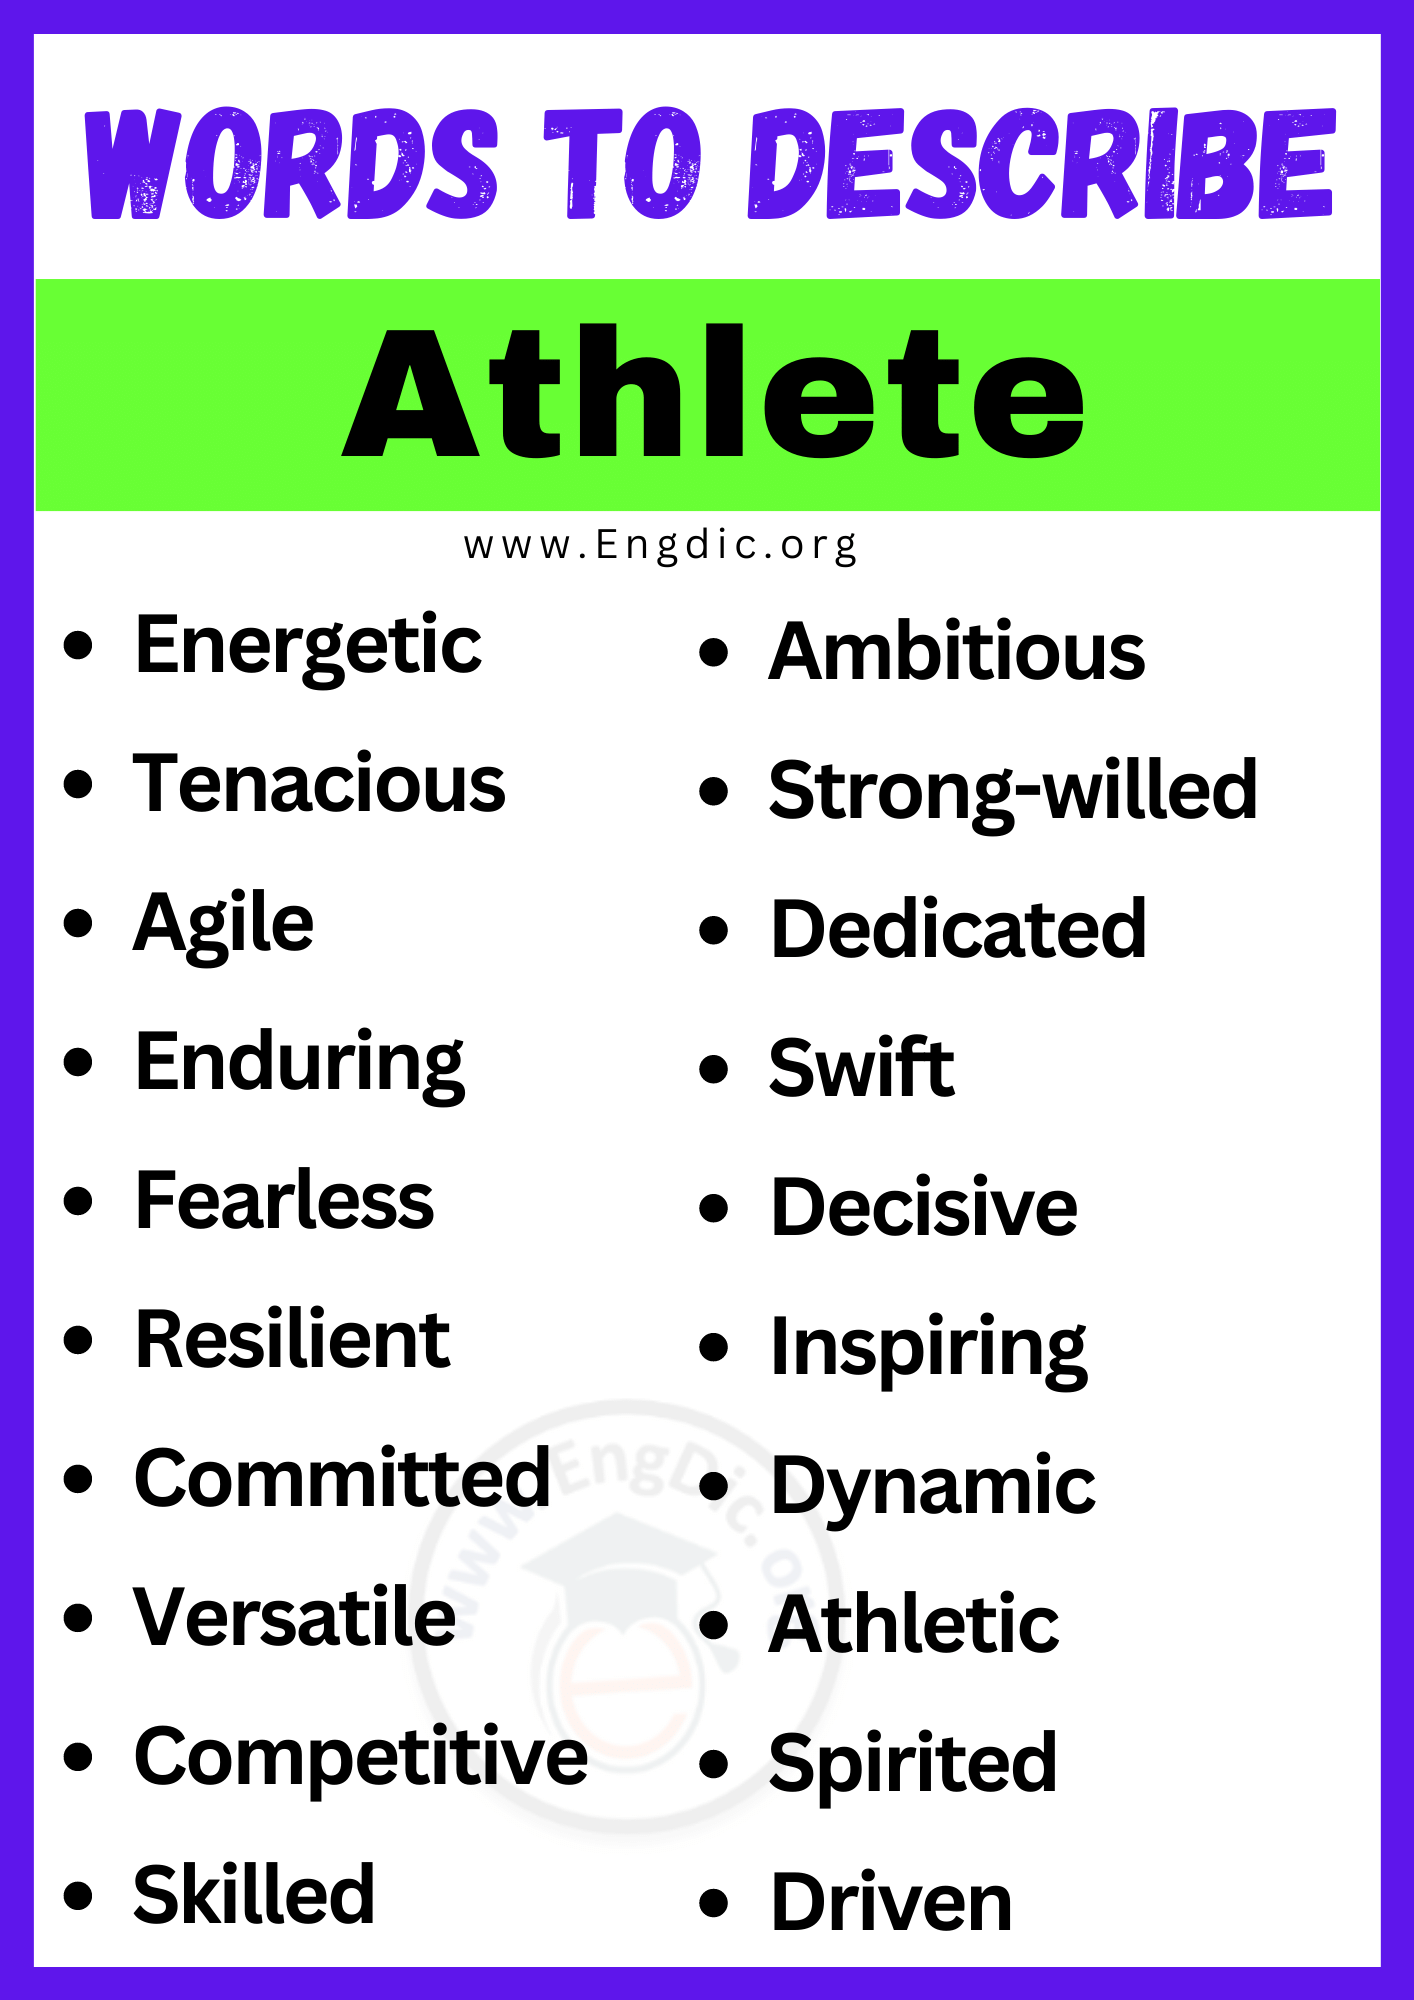 Words to Describe Athlete